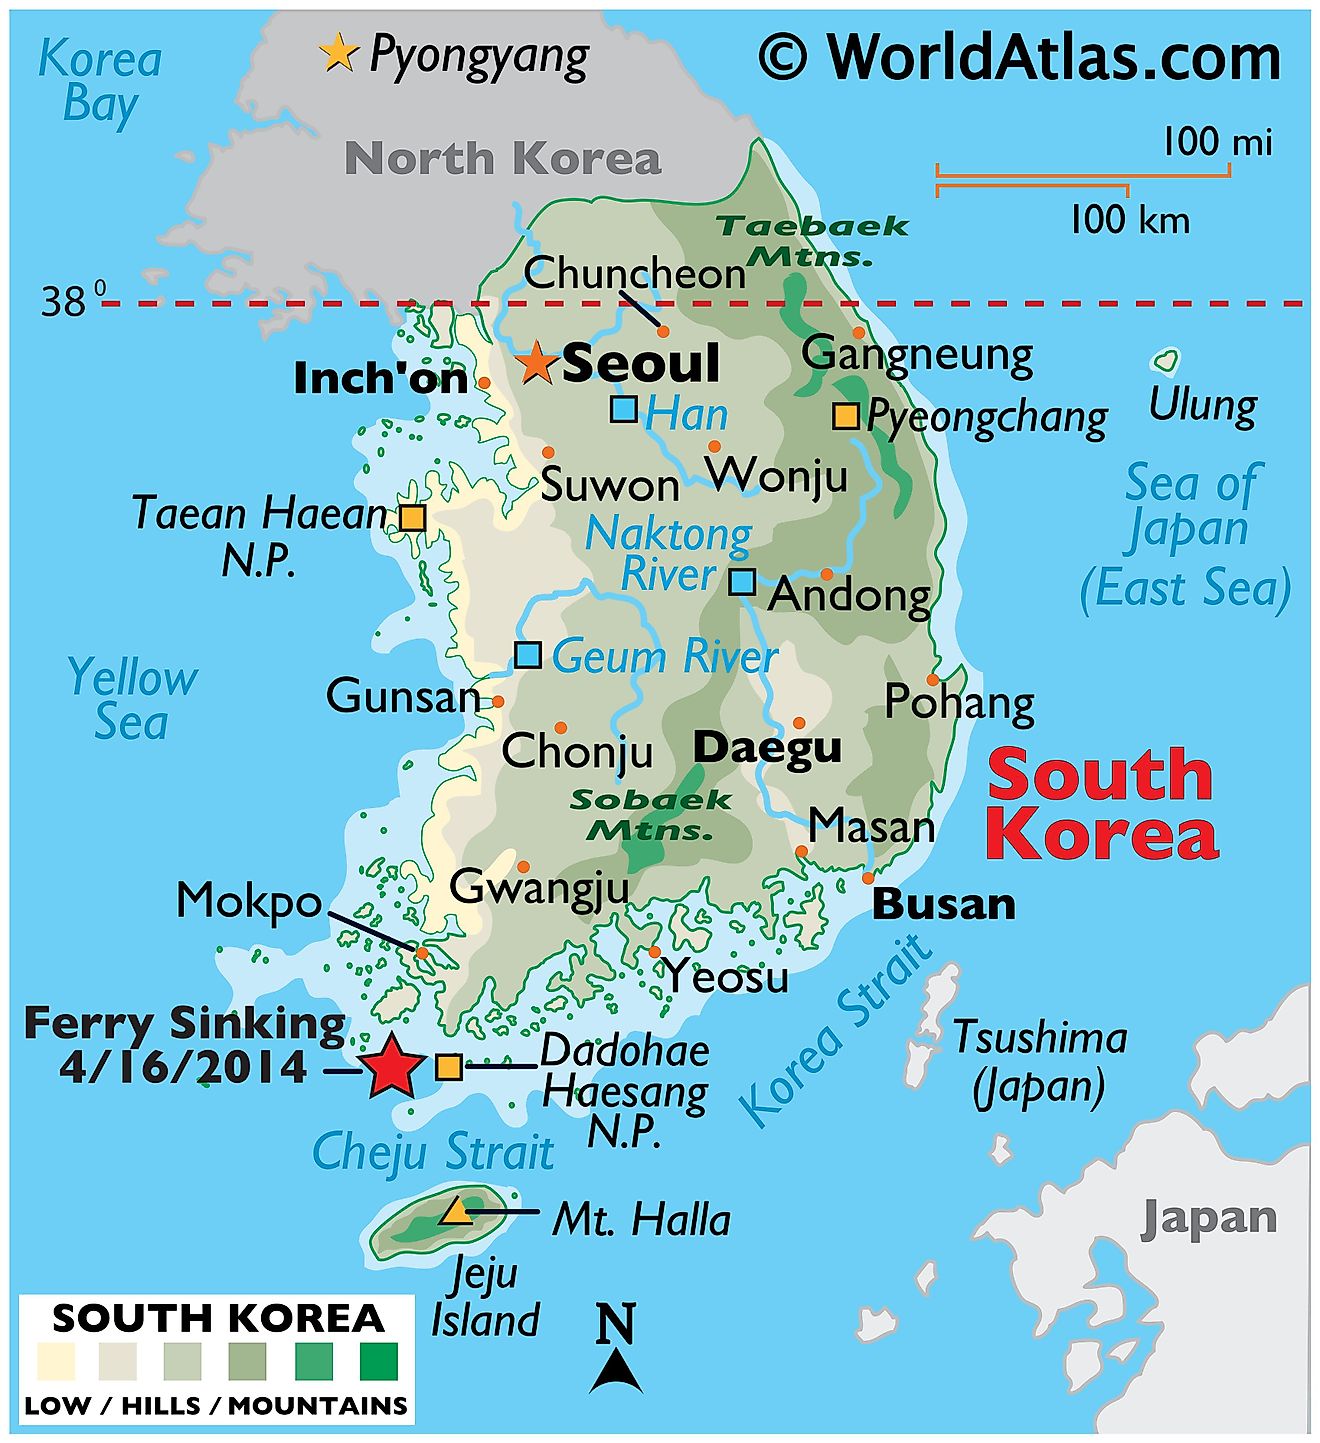 South Korea Area Map South Korea Maps & Facts - World Atlas